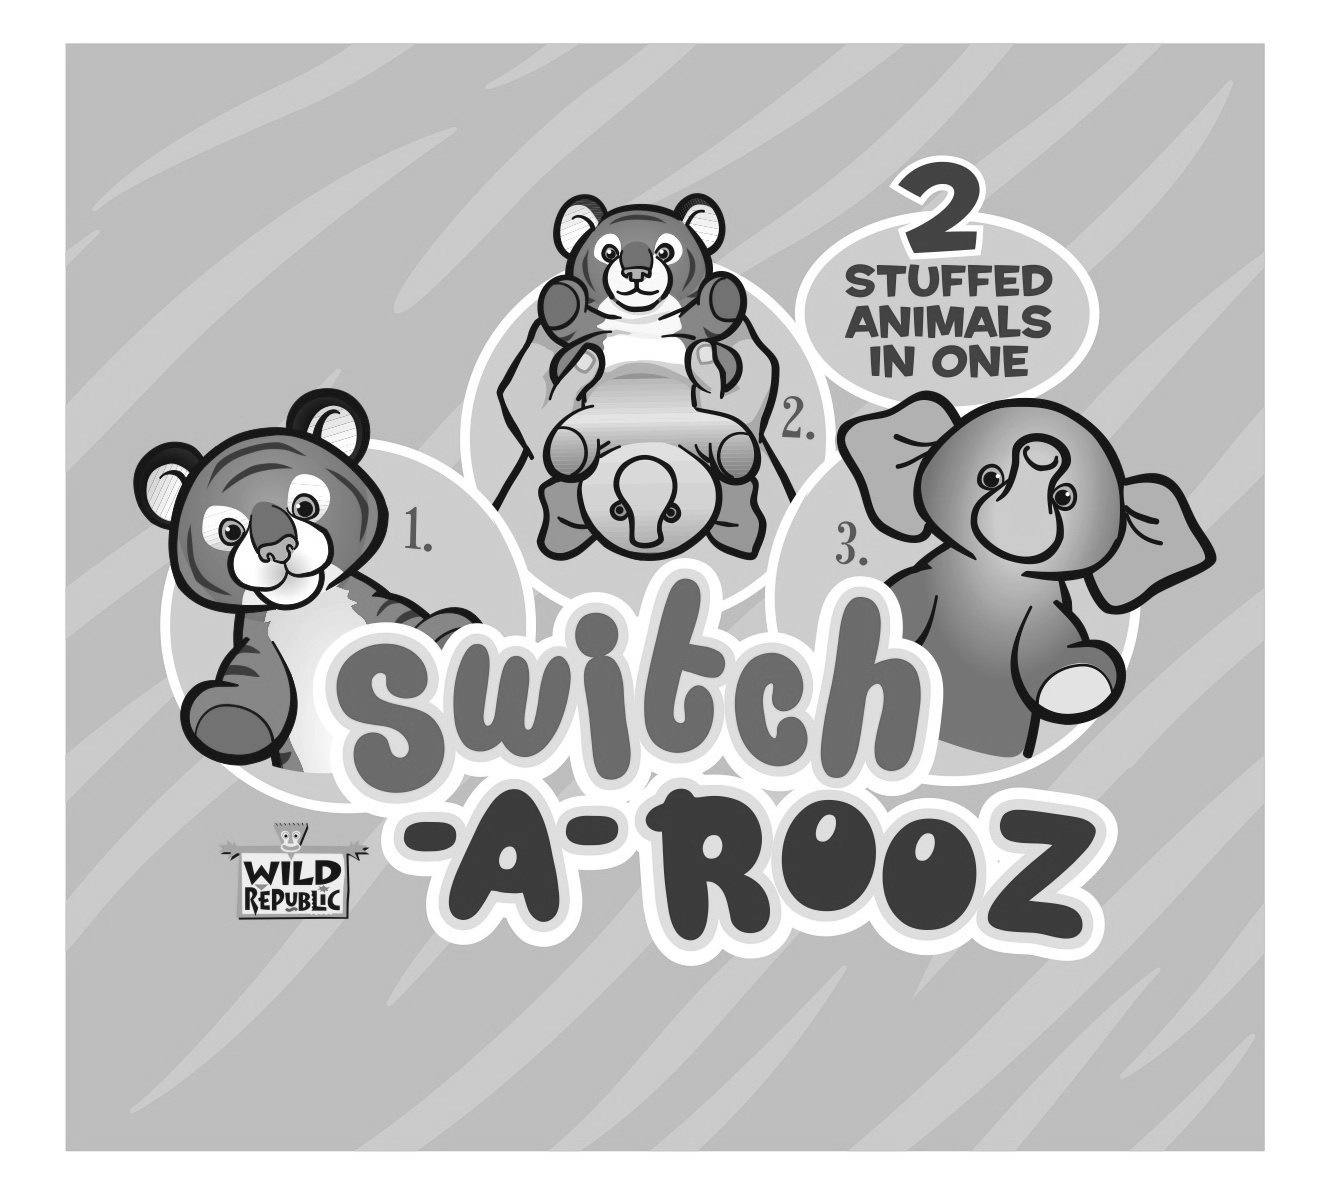  SWITCH-A-ROOZ WILD REPUBLIC 1. 2. 3. 2 STUFFED ANIMALS IN ONE